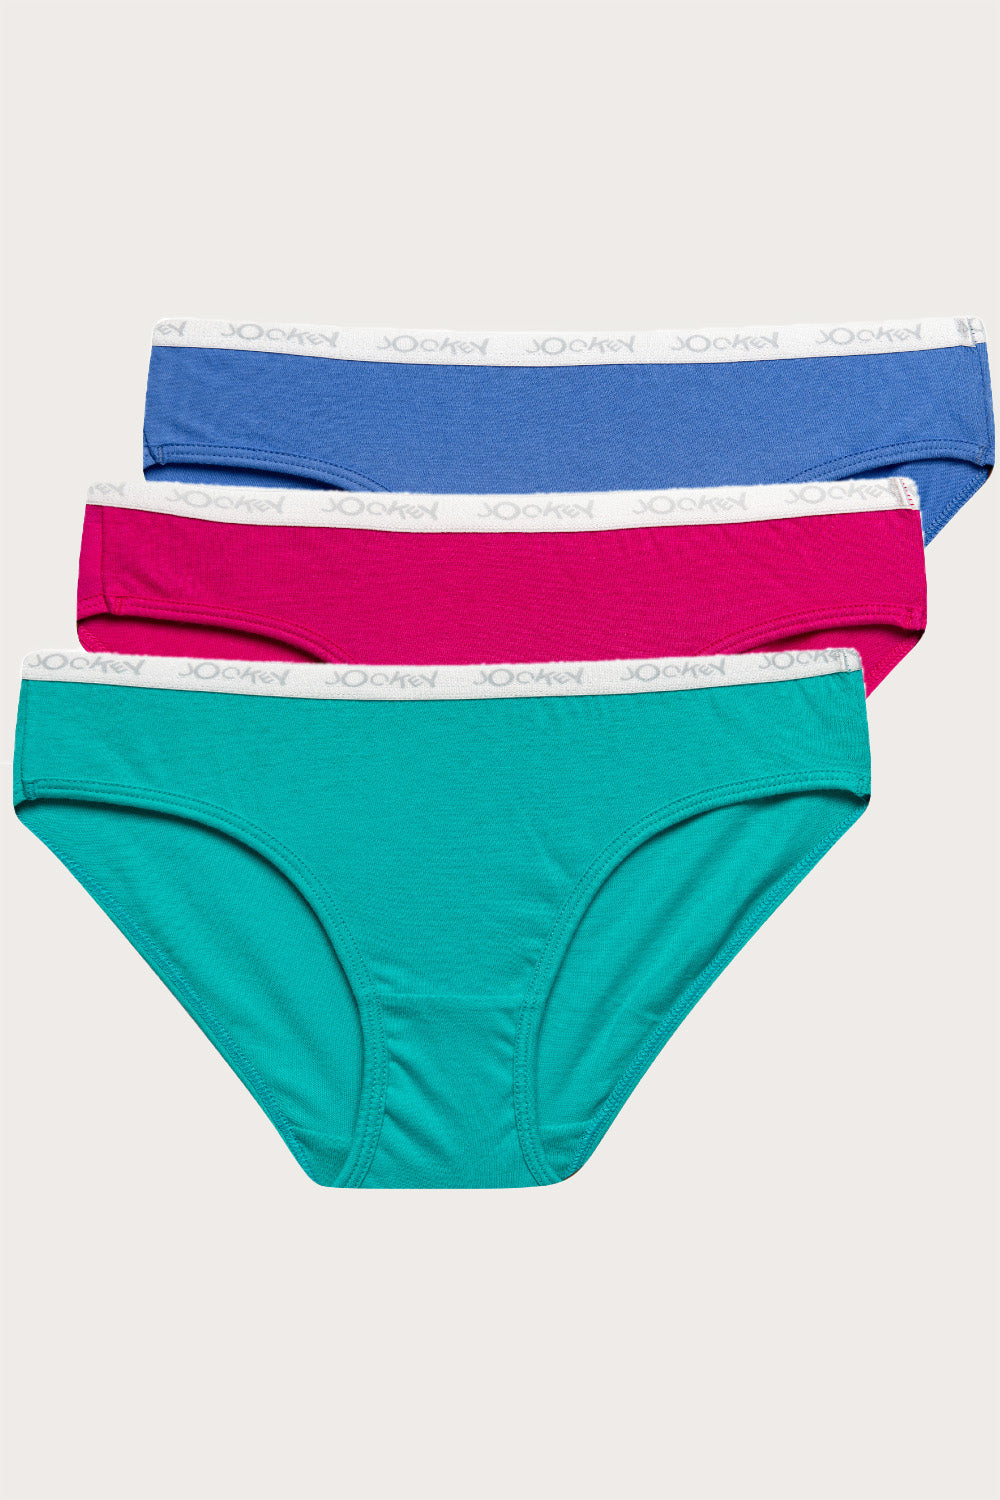 Jockey Girls French Cut Panties - 3 Pack